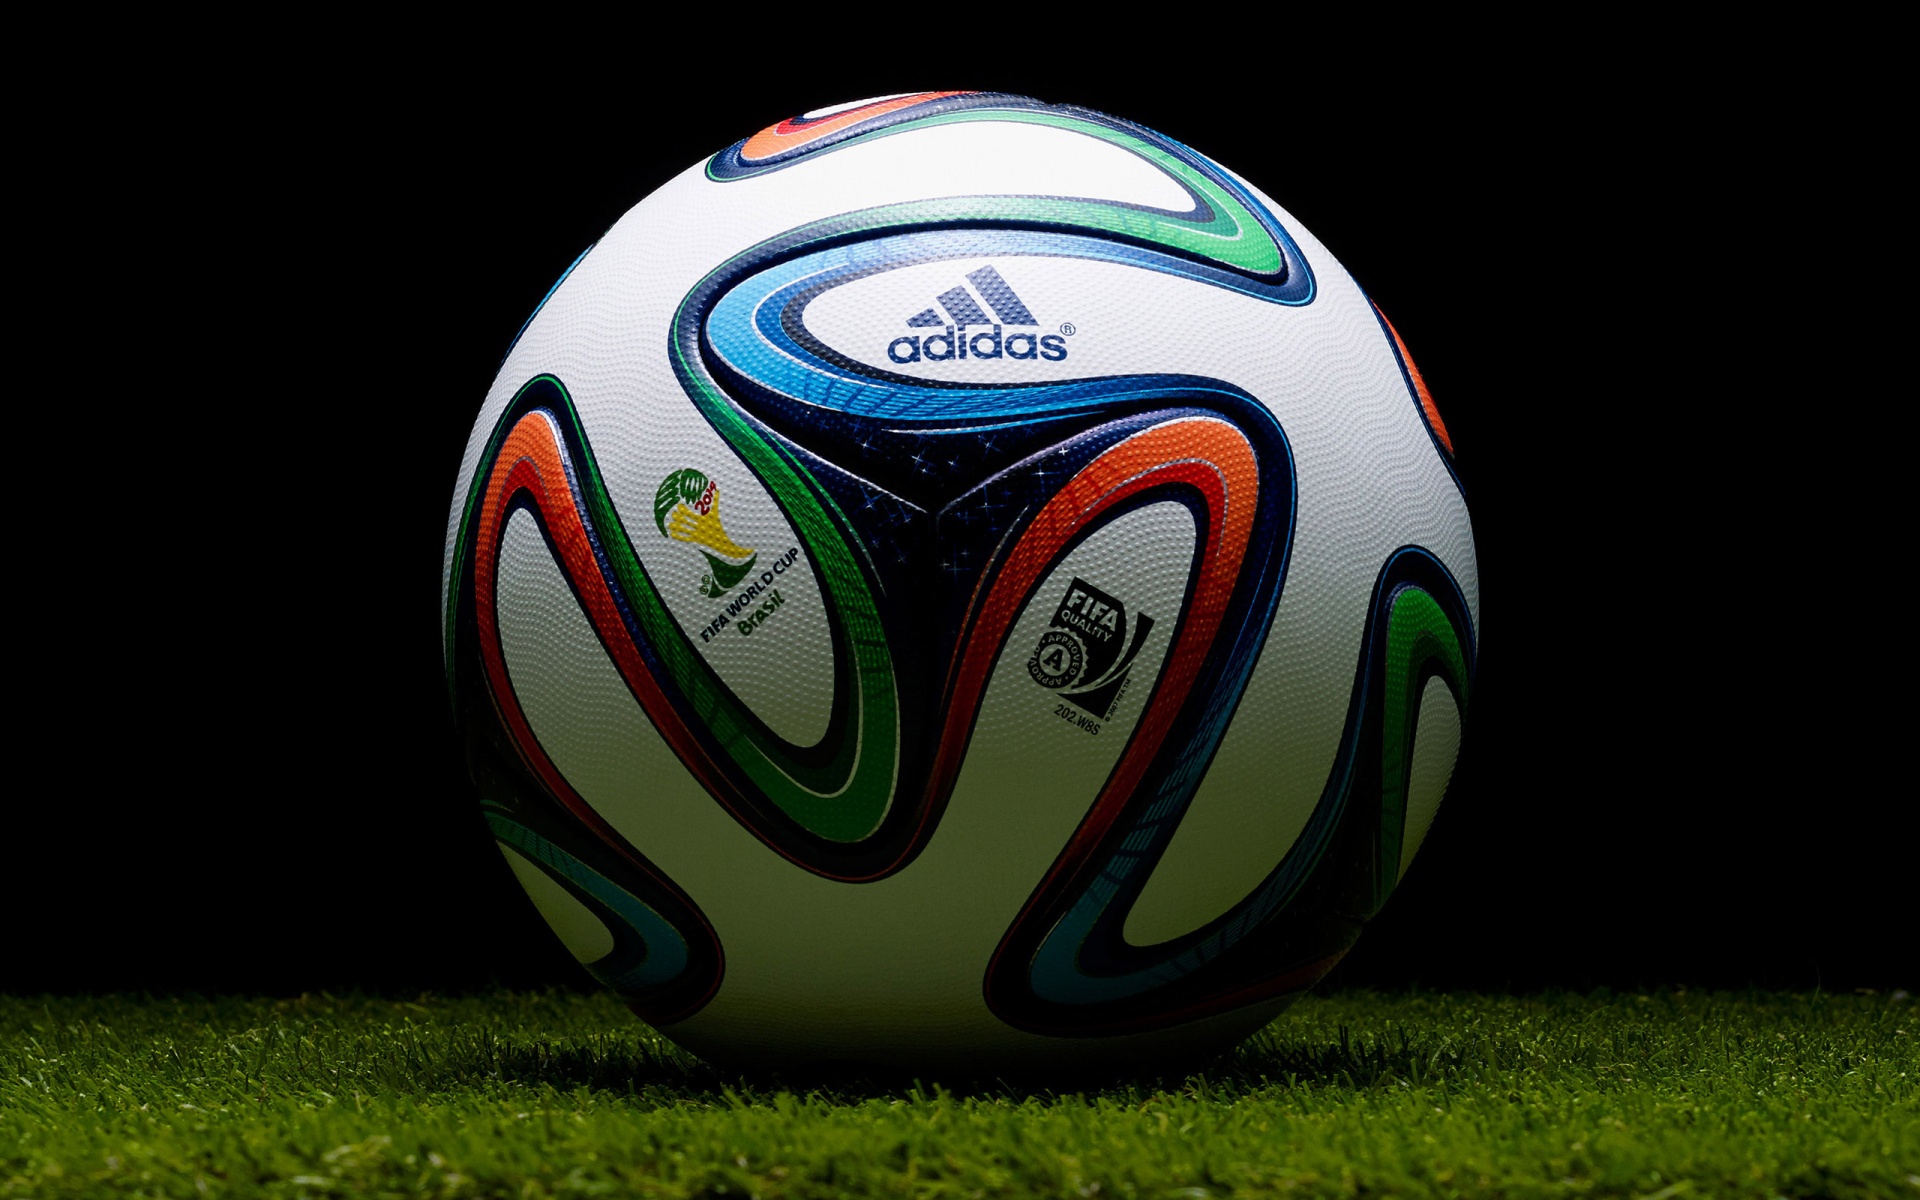 Brazuca 2014 WC Official Match Ball